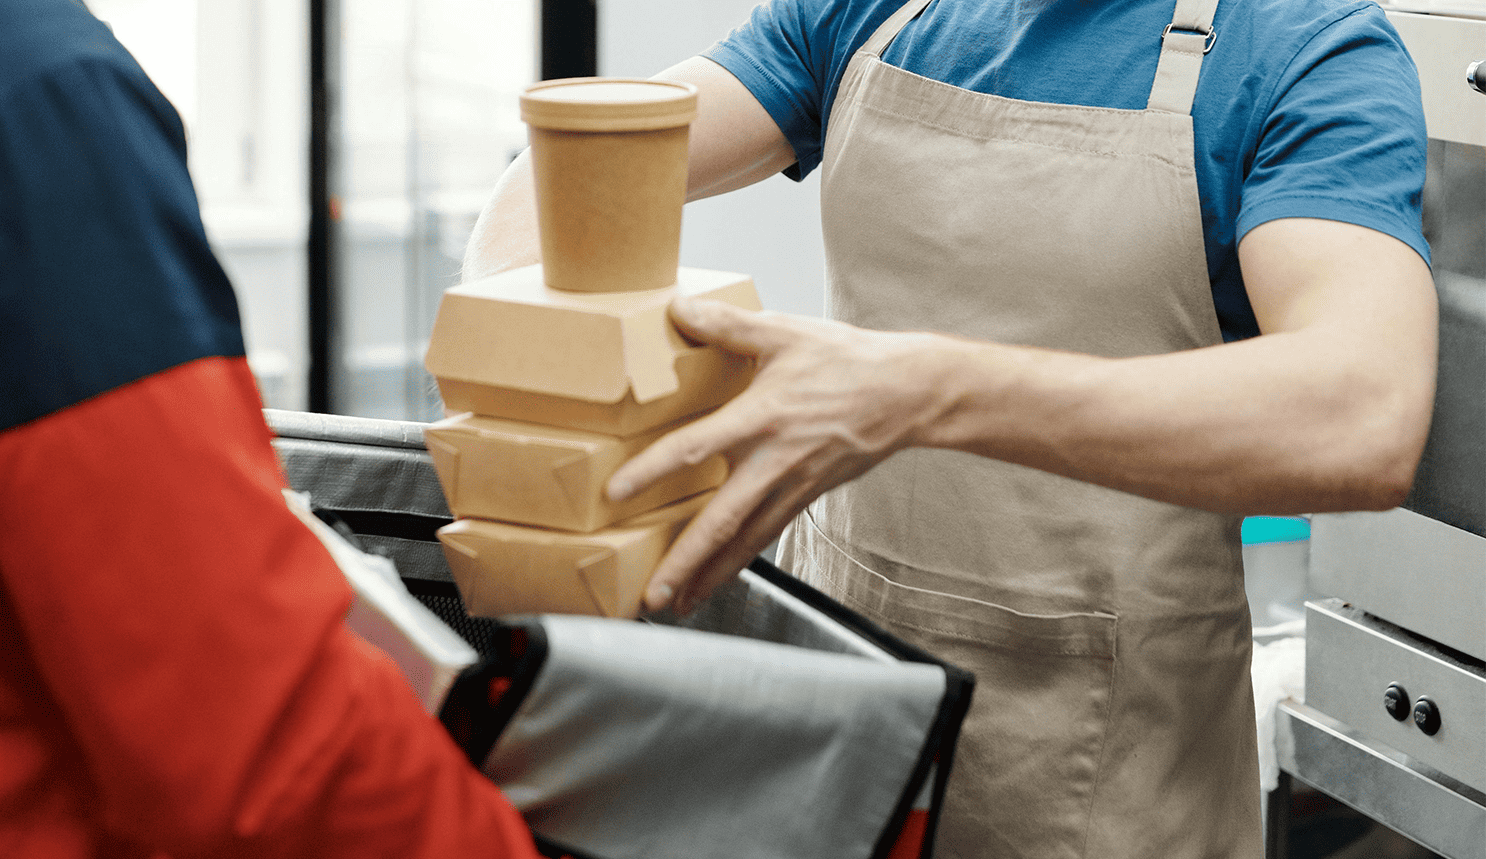 CardFree online ordering restaurant delivery integration